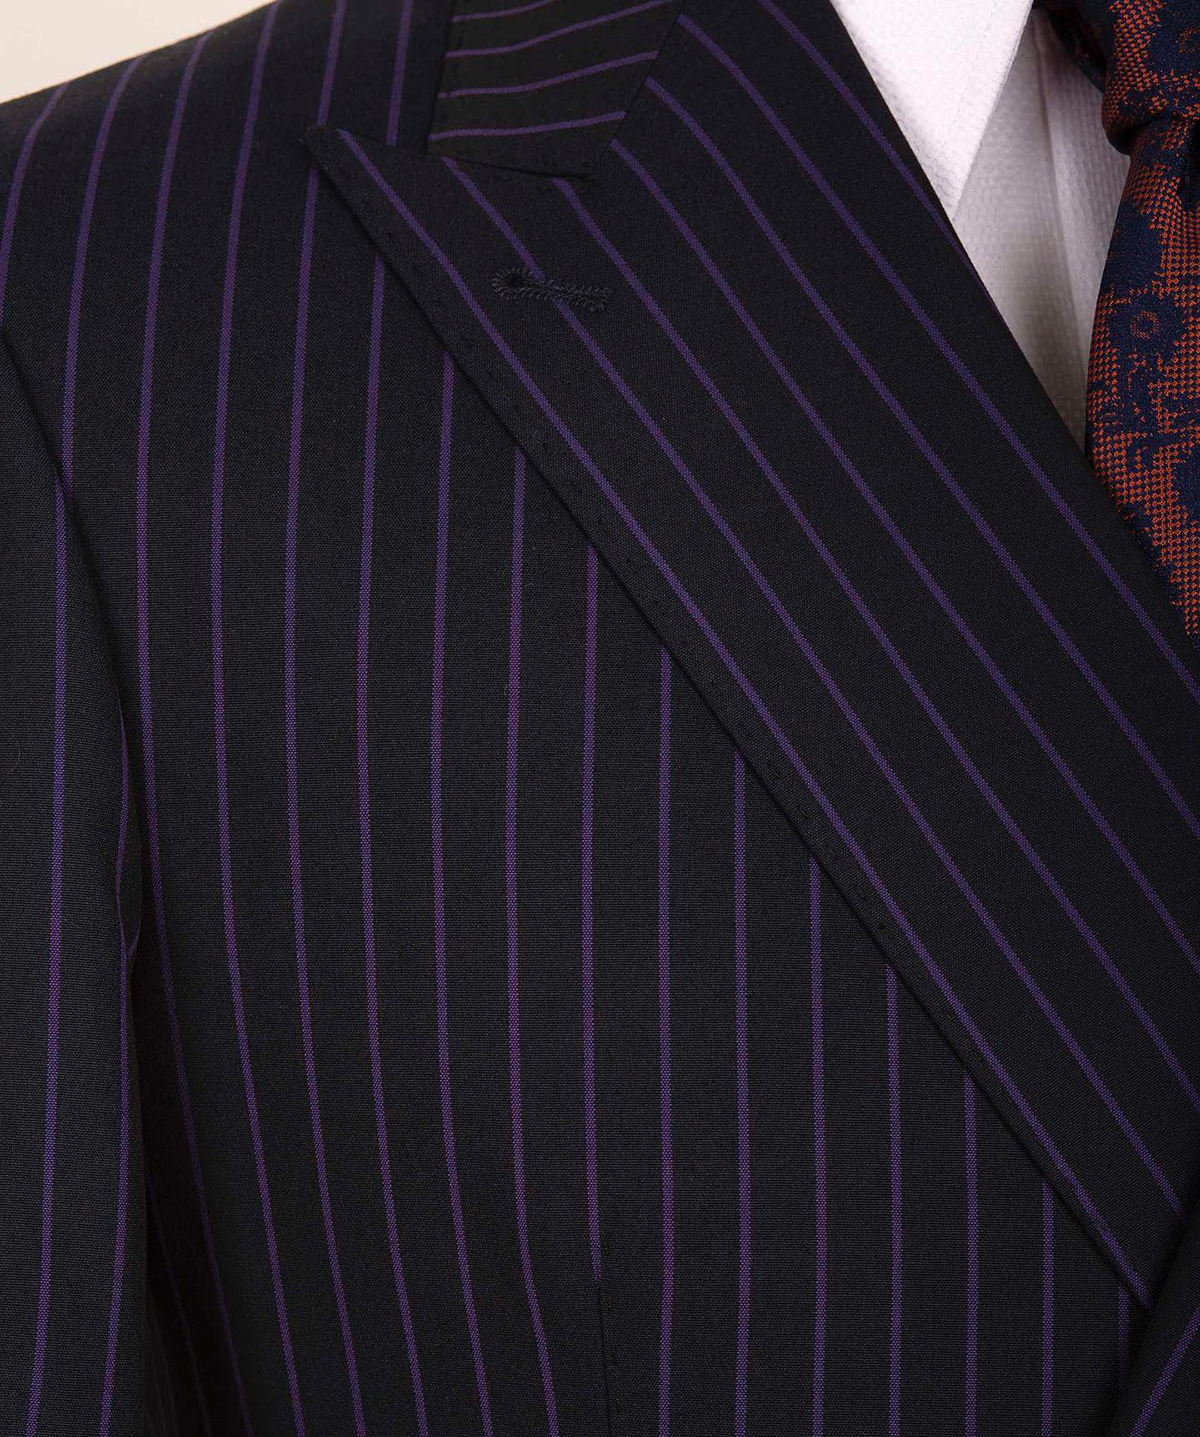 Unique Design Pin Stripe Men's Tuxedo Slim Fit Wedding Suit Peaked Lapel Blazer Only One Piece